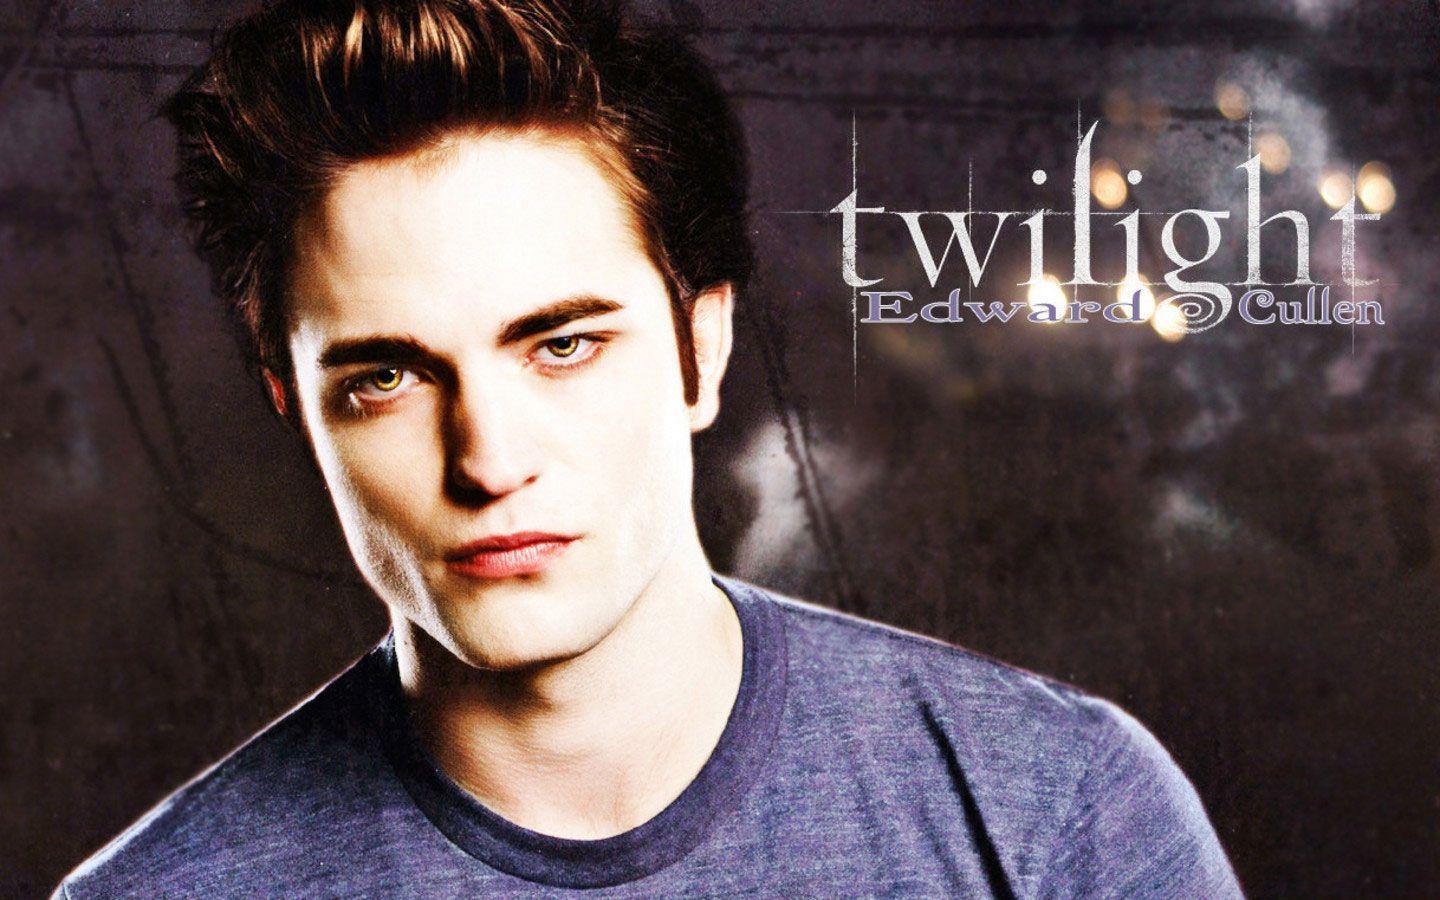 Free download Twilight Wallpaper Edward Cullen [1440x900]